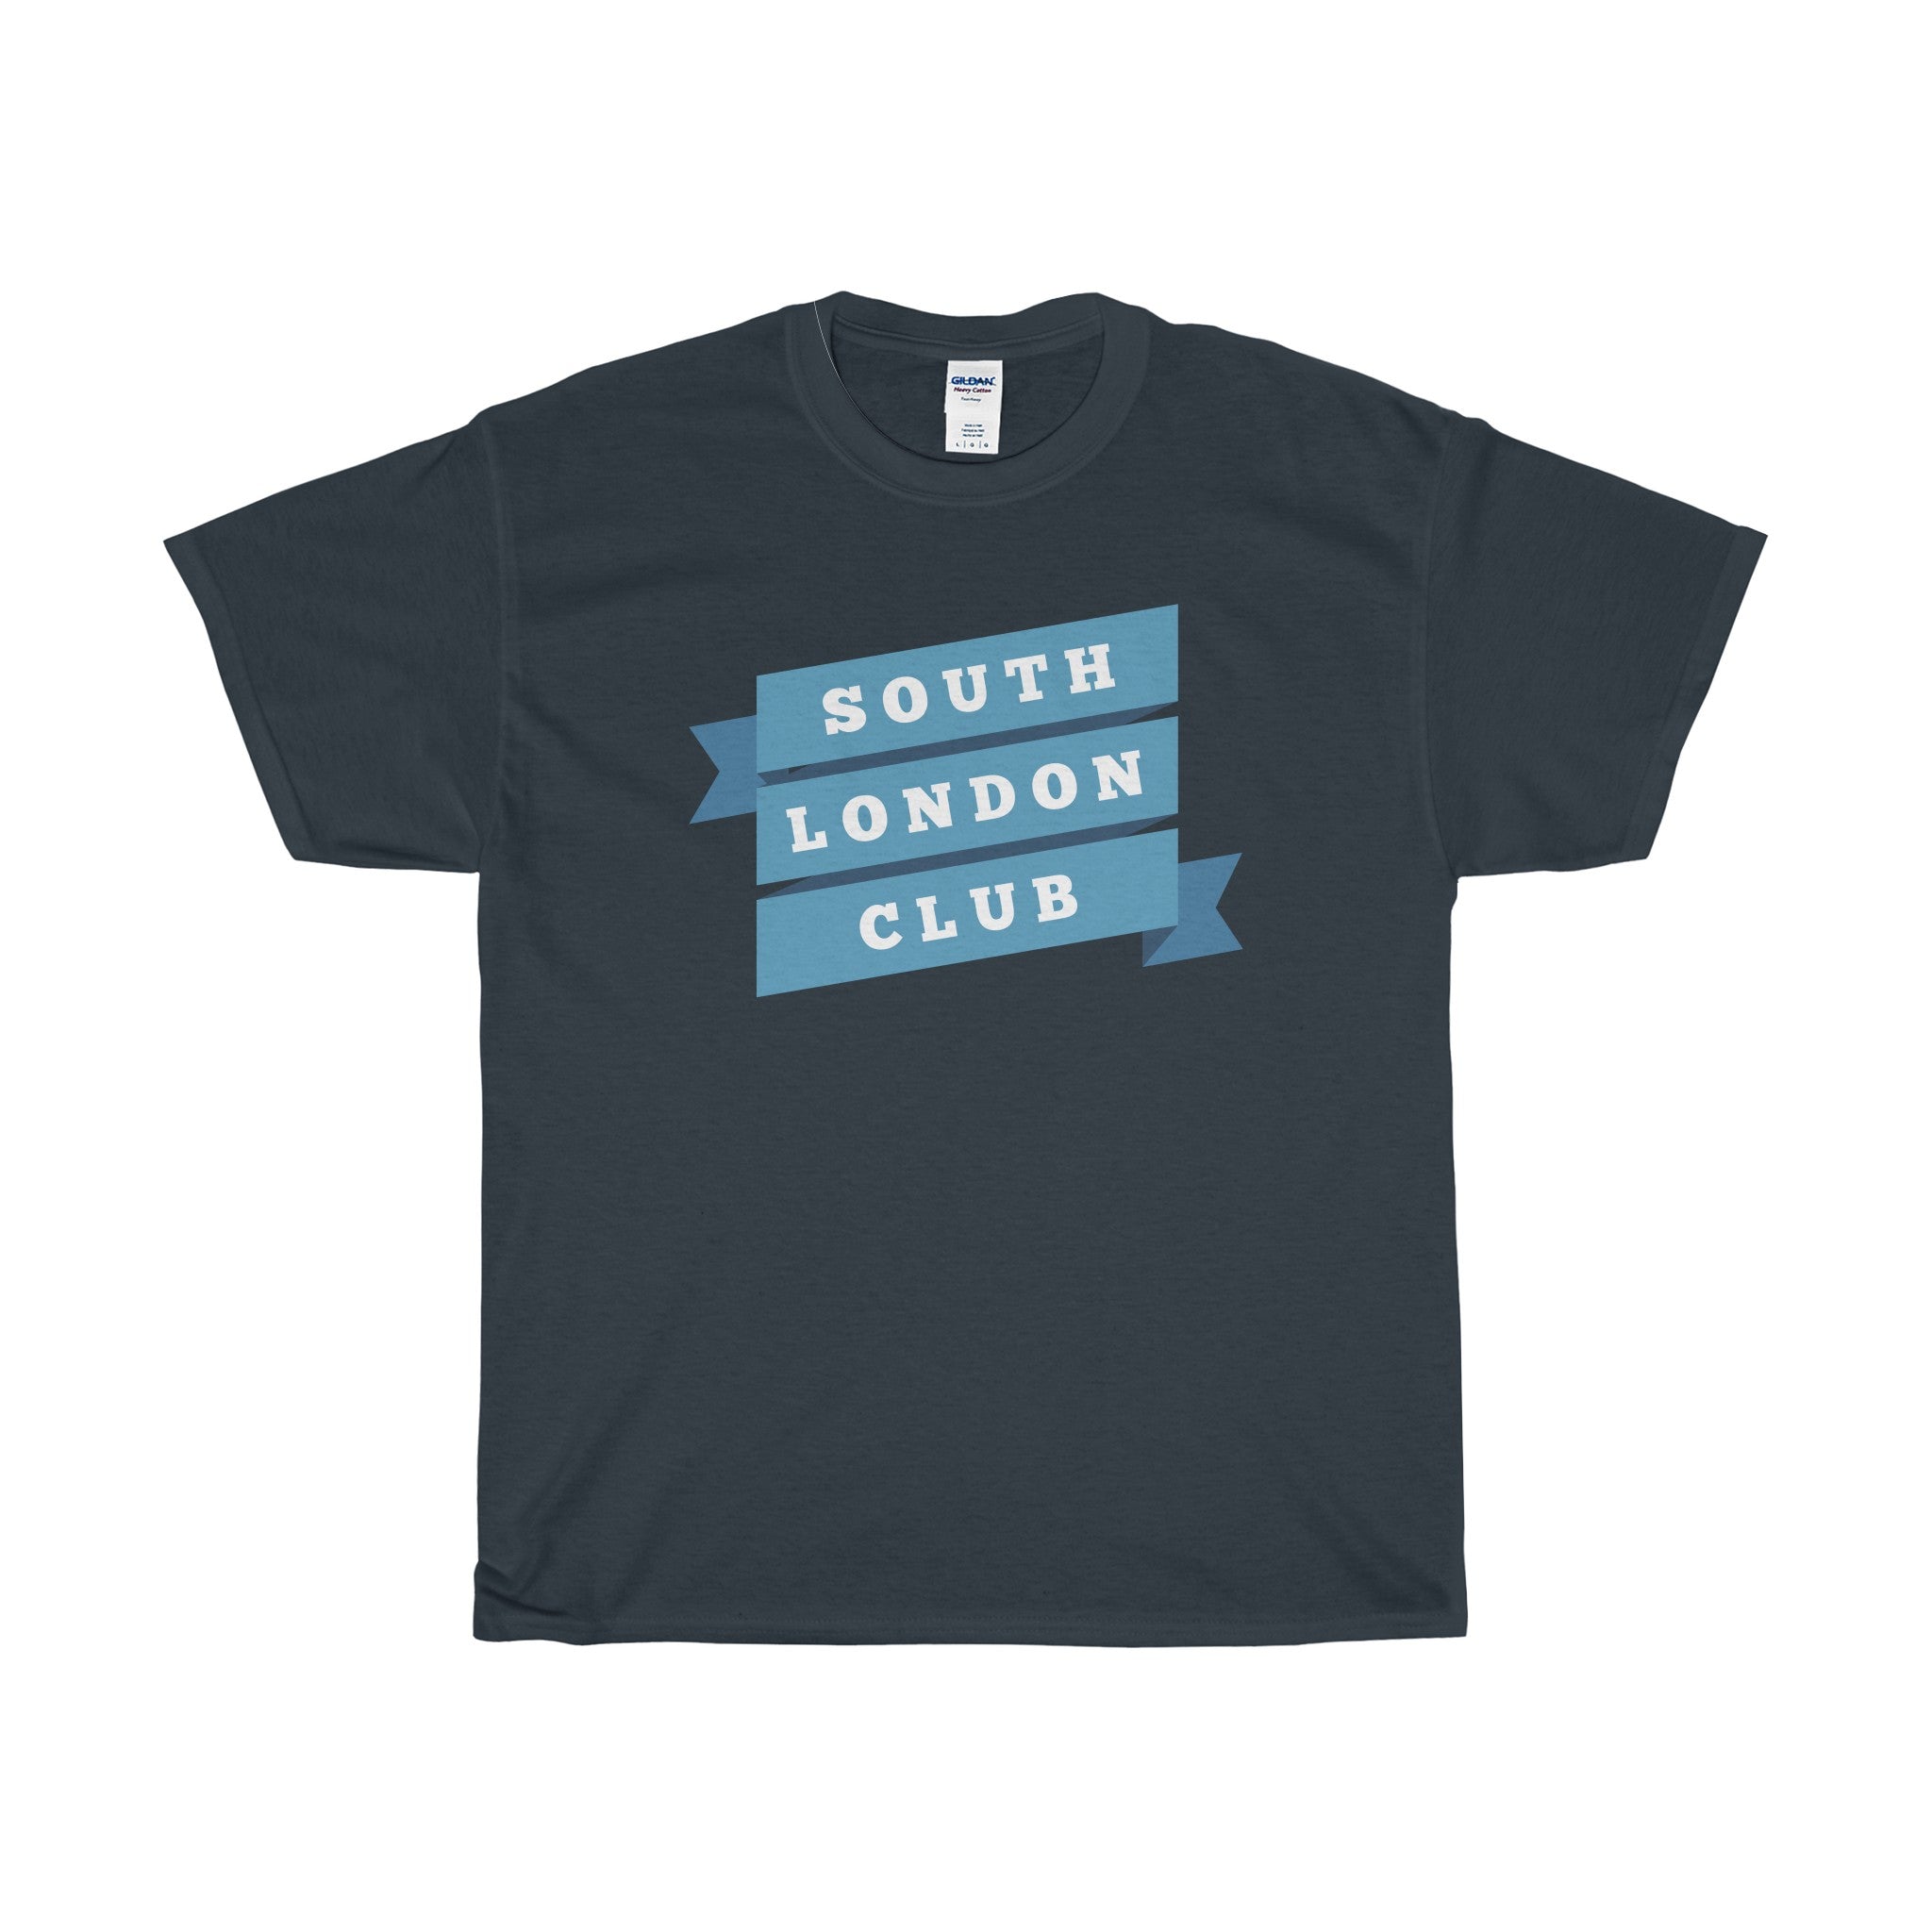 South London Club Mens T-shirt